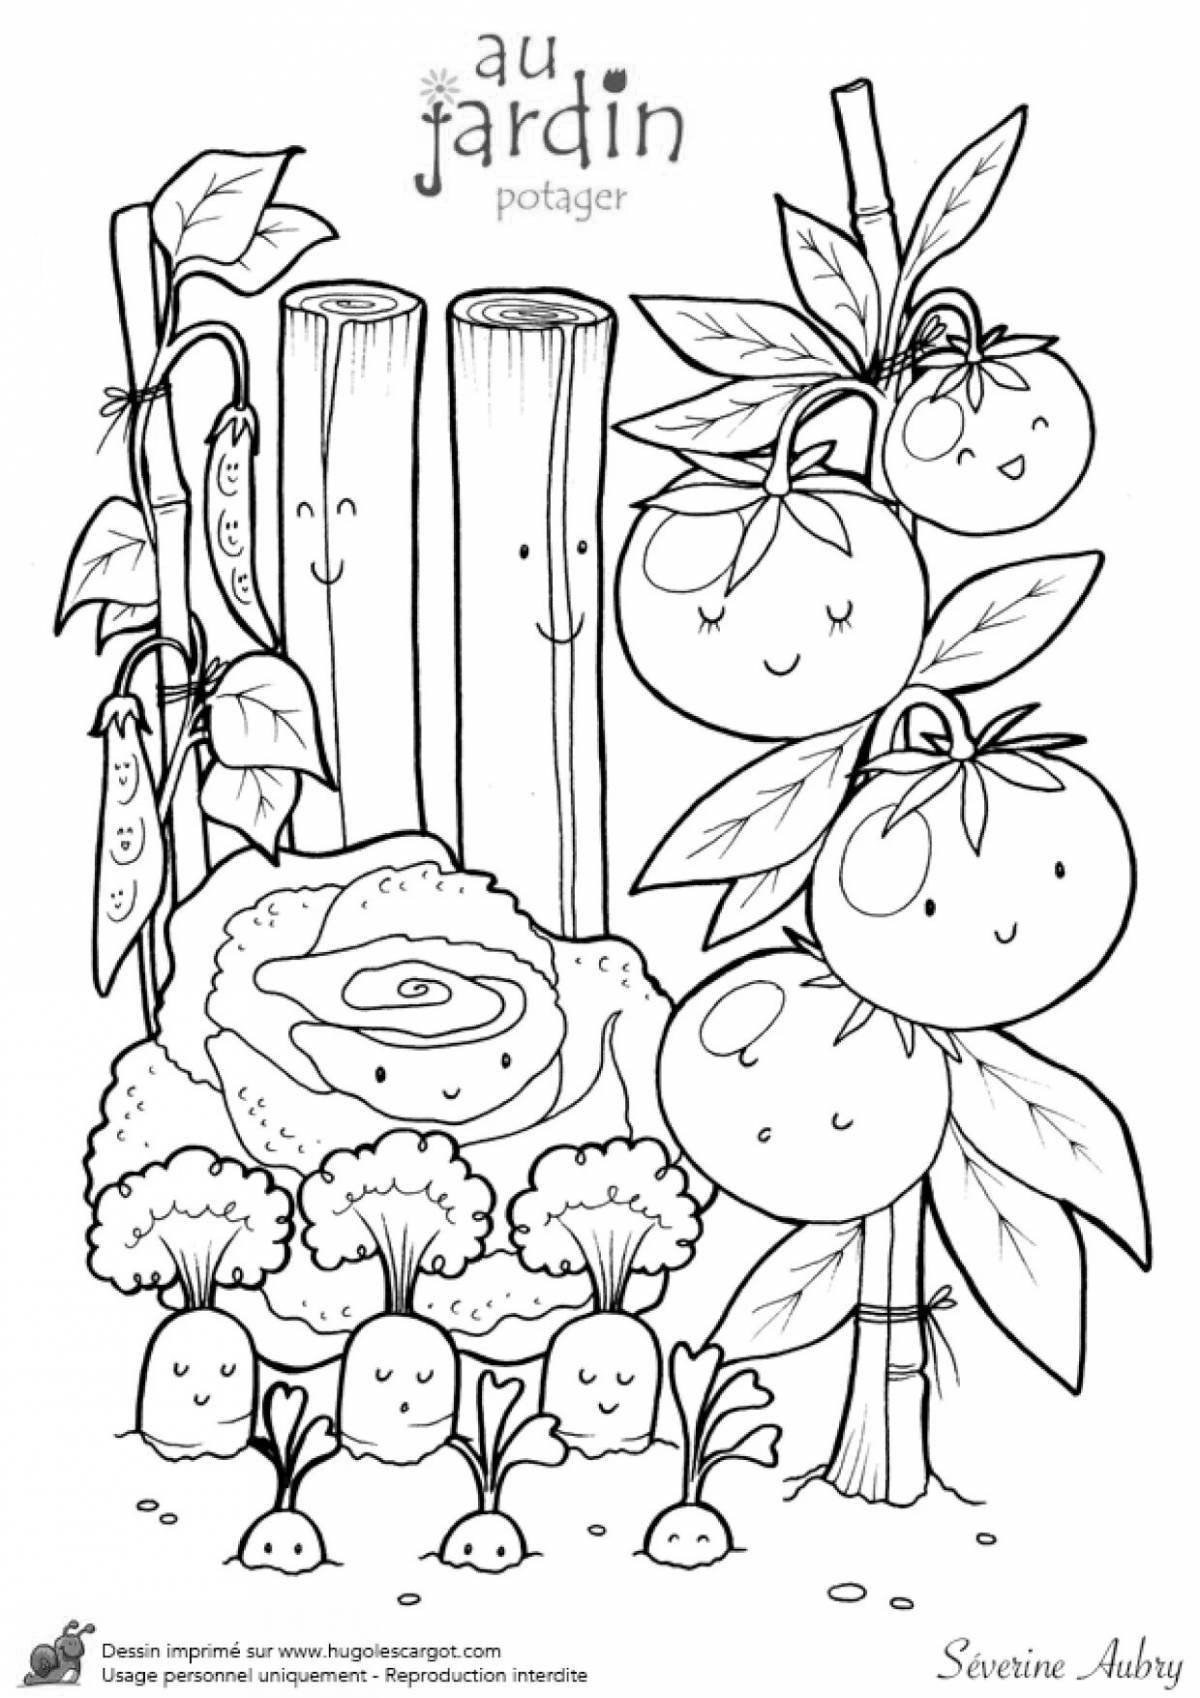 Glorious vegetable garden coloring book for children